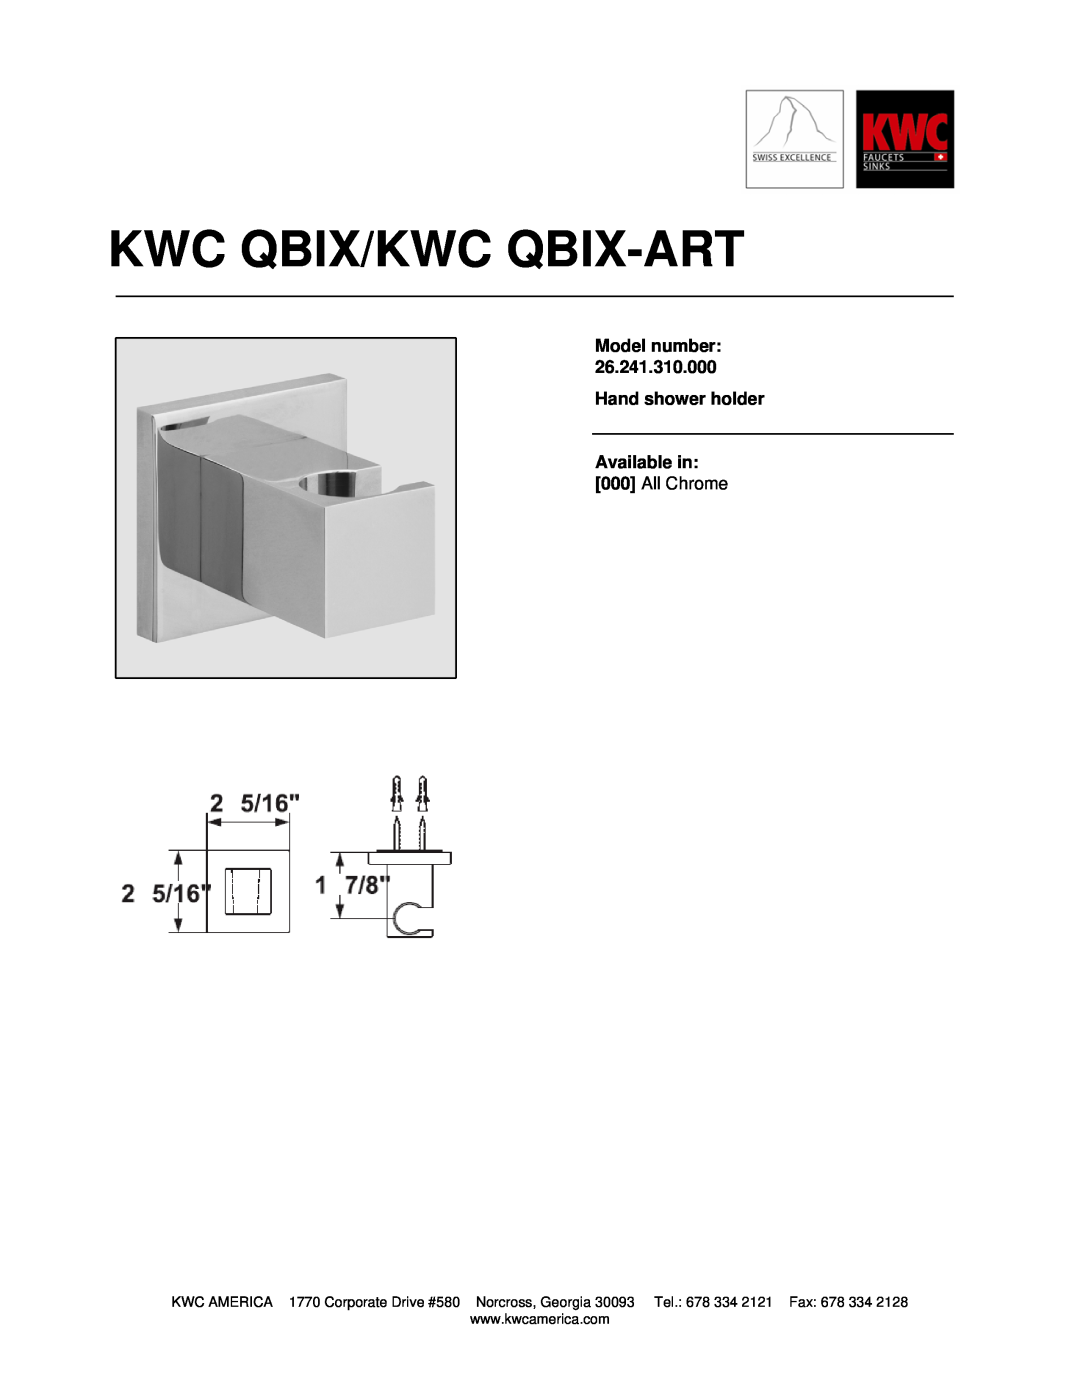 KWC 26.241.310.000 manual Kwc Qbix/Kwc Qbix-Art, Model number Hand shower holder, Available in 000 All Chrome 